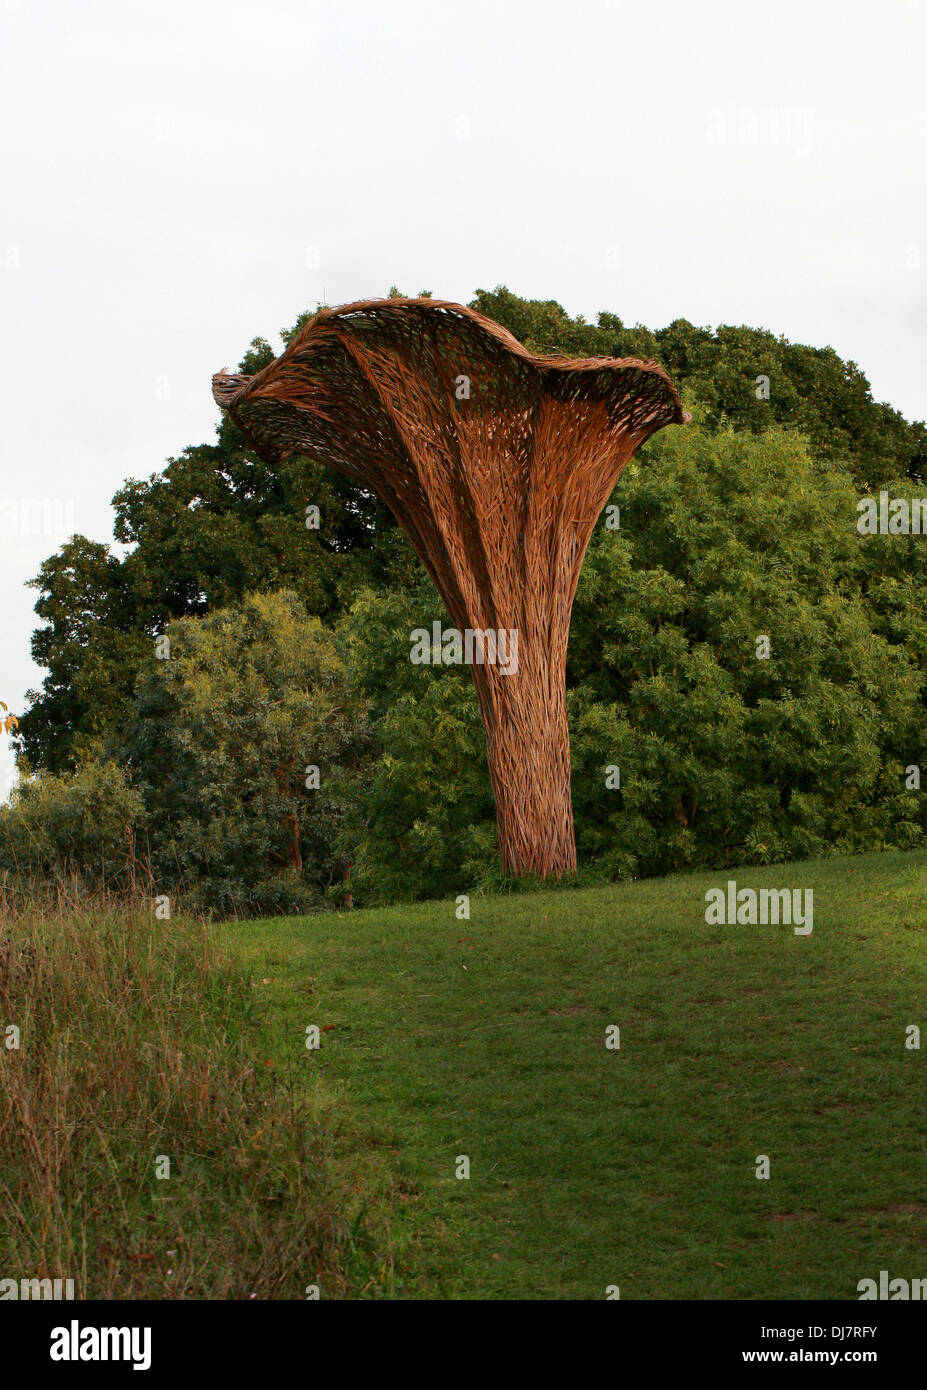 Willow Sculpture of Chantarelle Mushroom, Kew Royal Botanical Gardens. Stock Photo